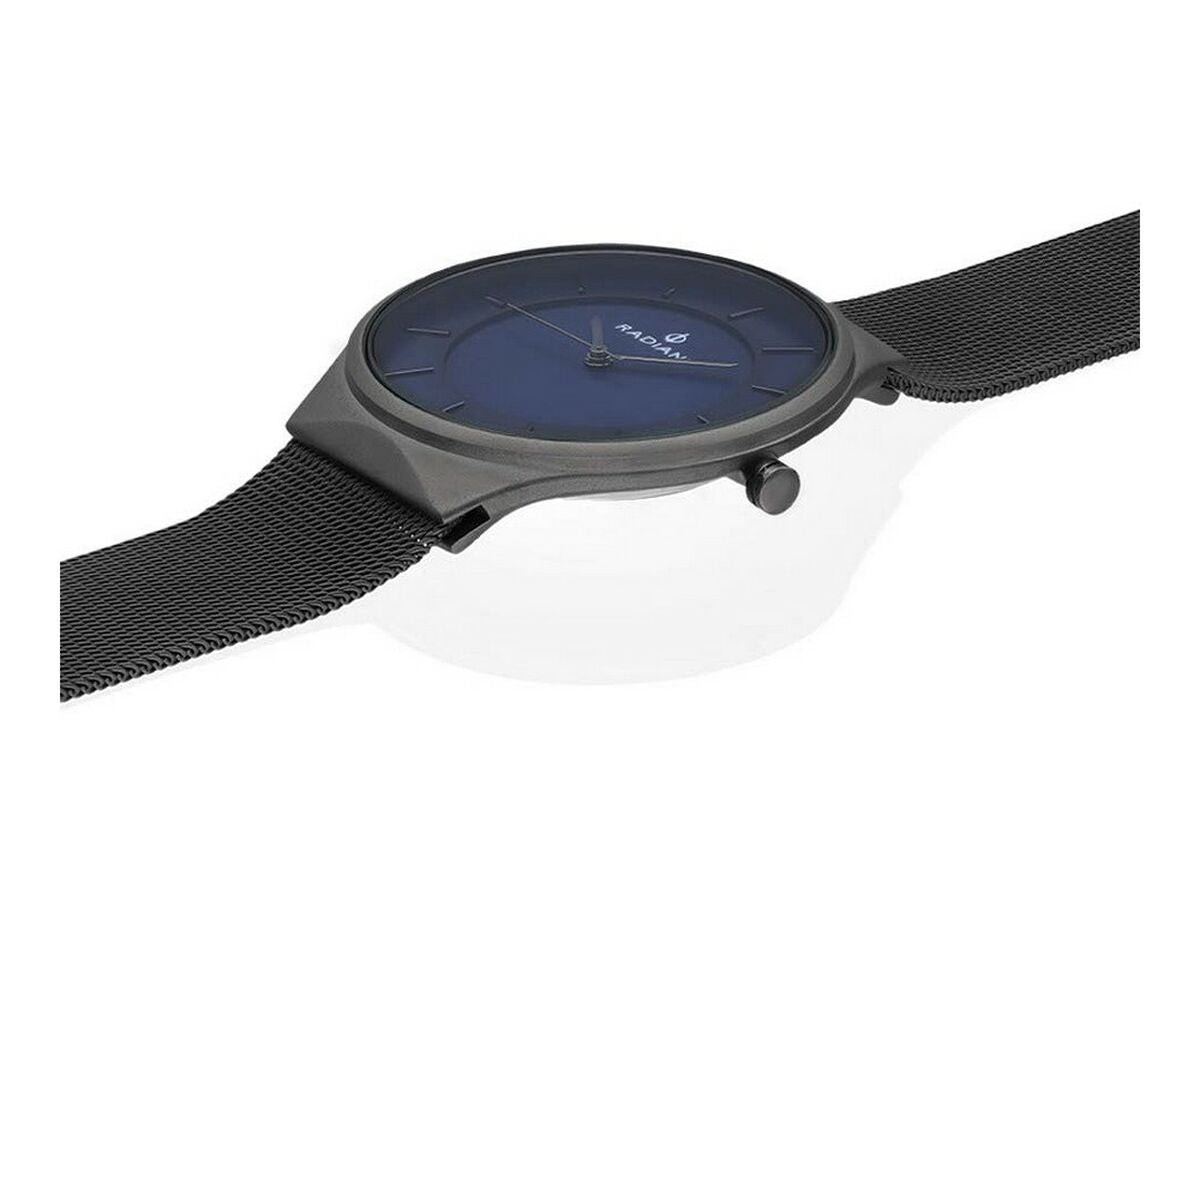 Horloge Heren Radiant RA531601 (Ø 41 mm)